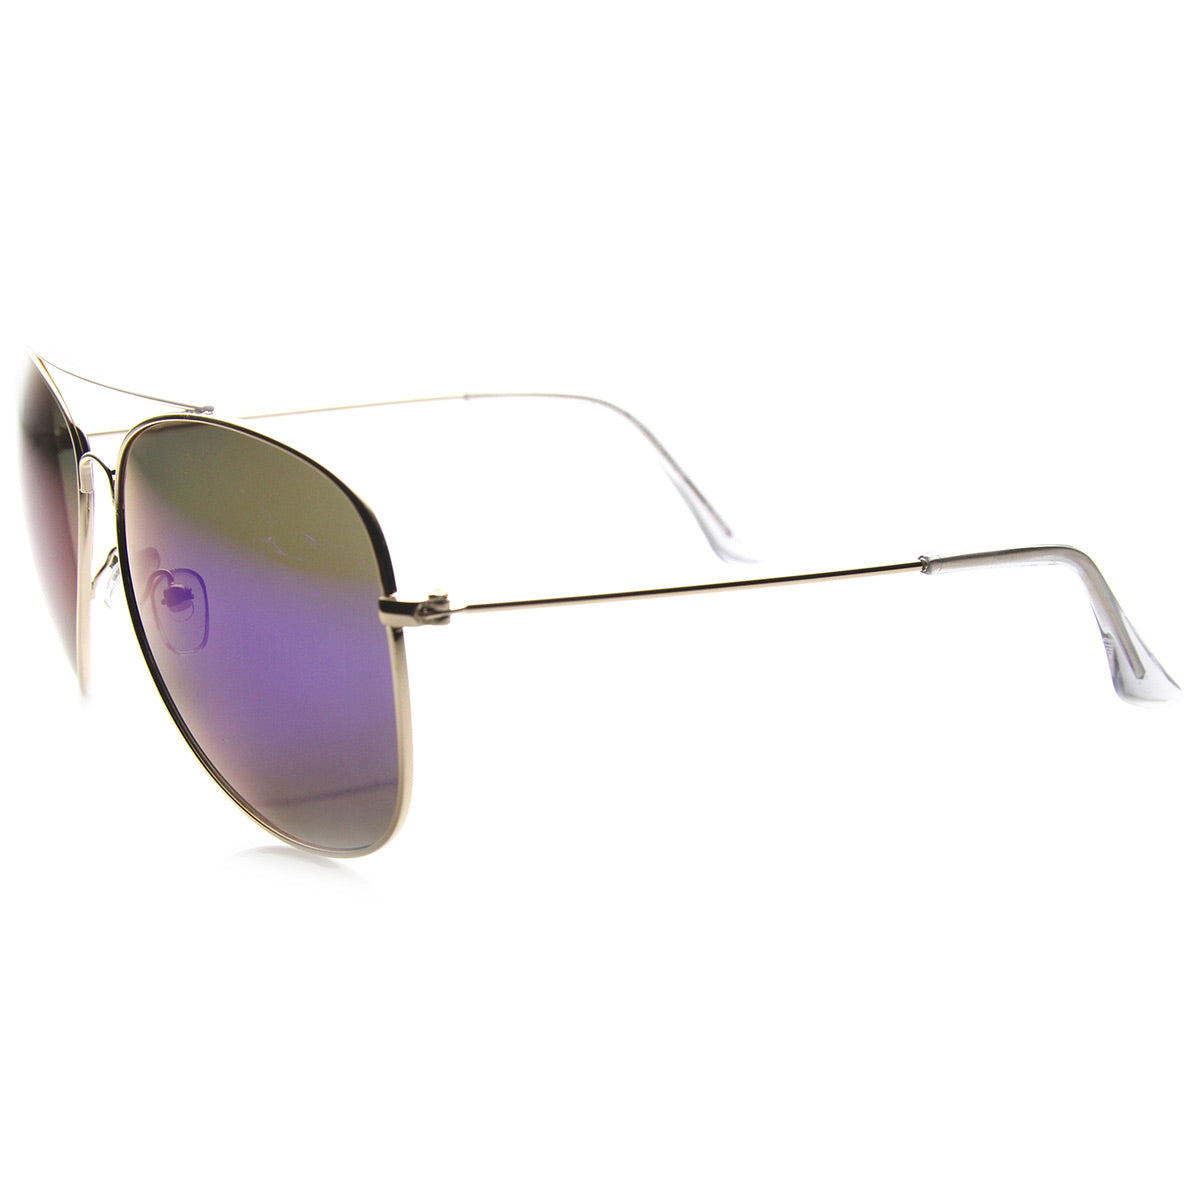 Rainbow Color Mirrored Lens Classic Aviator Sunglasses